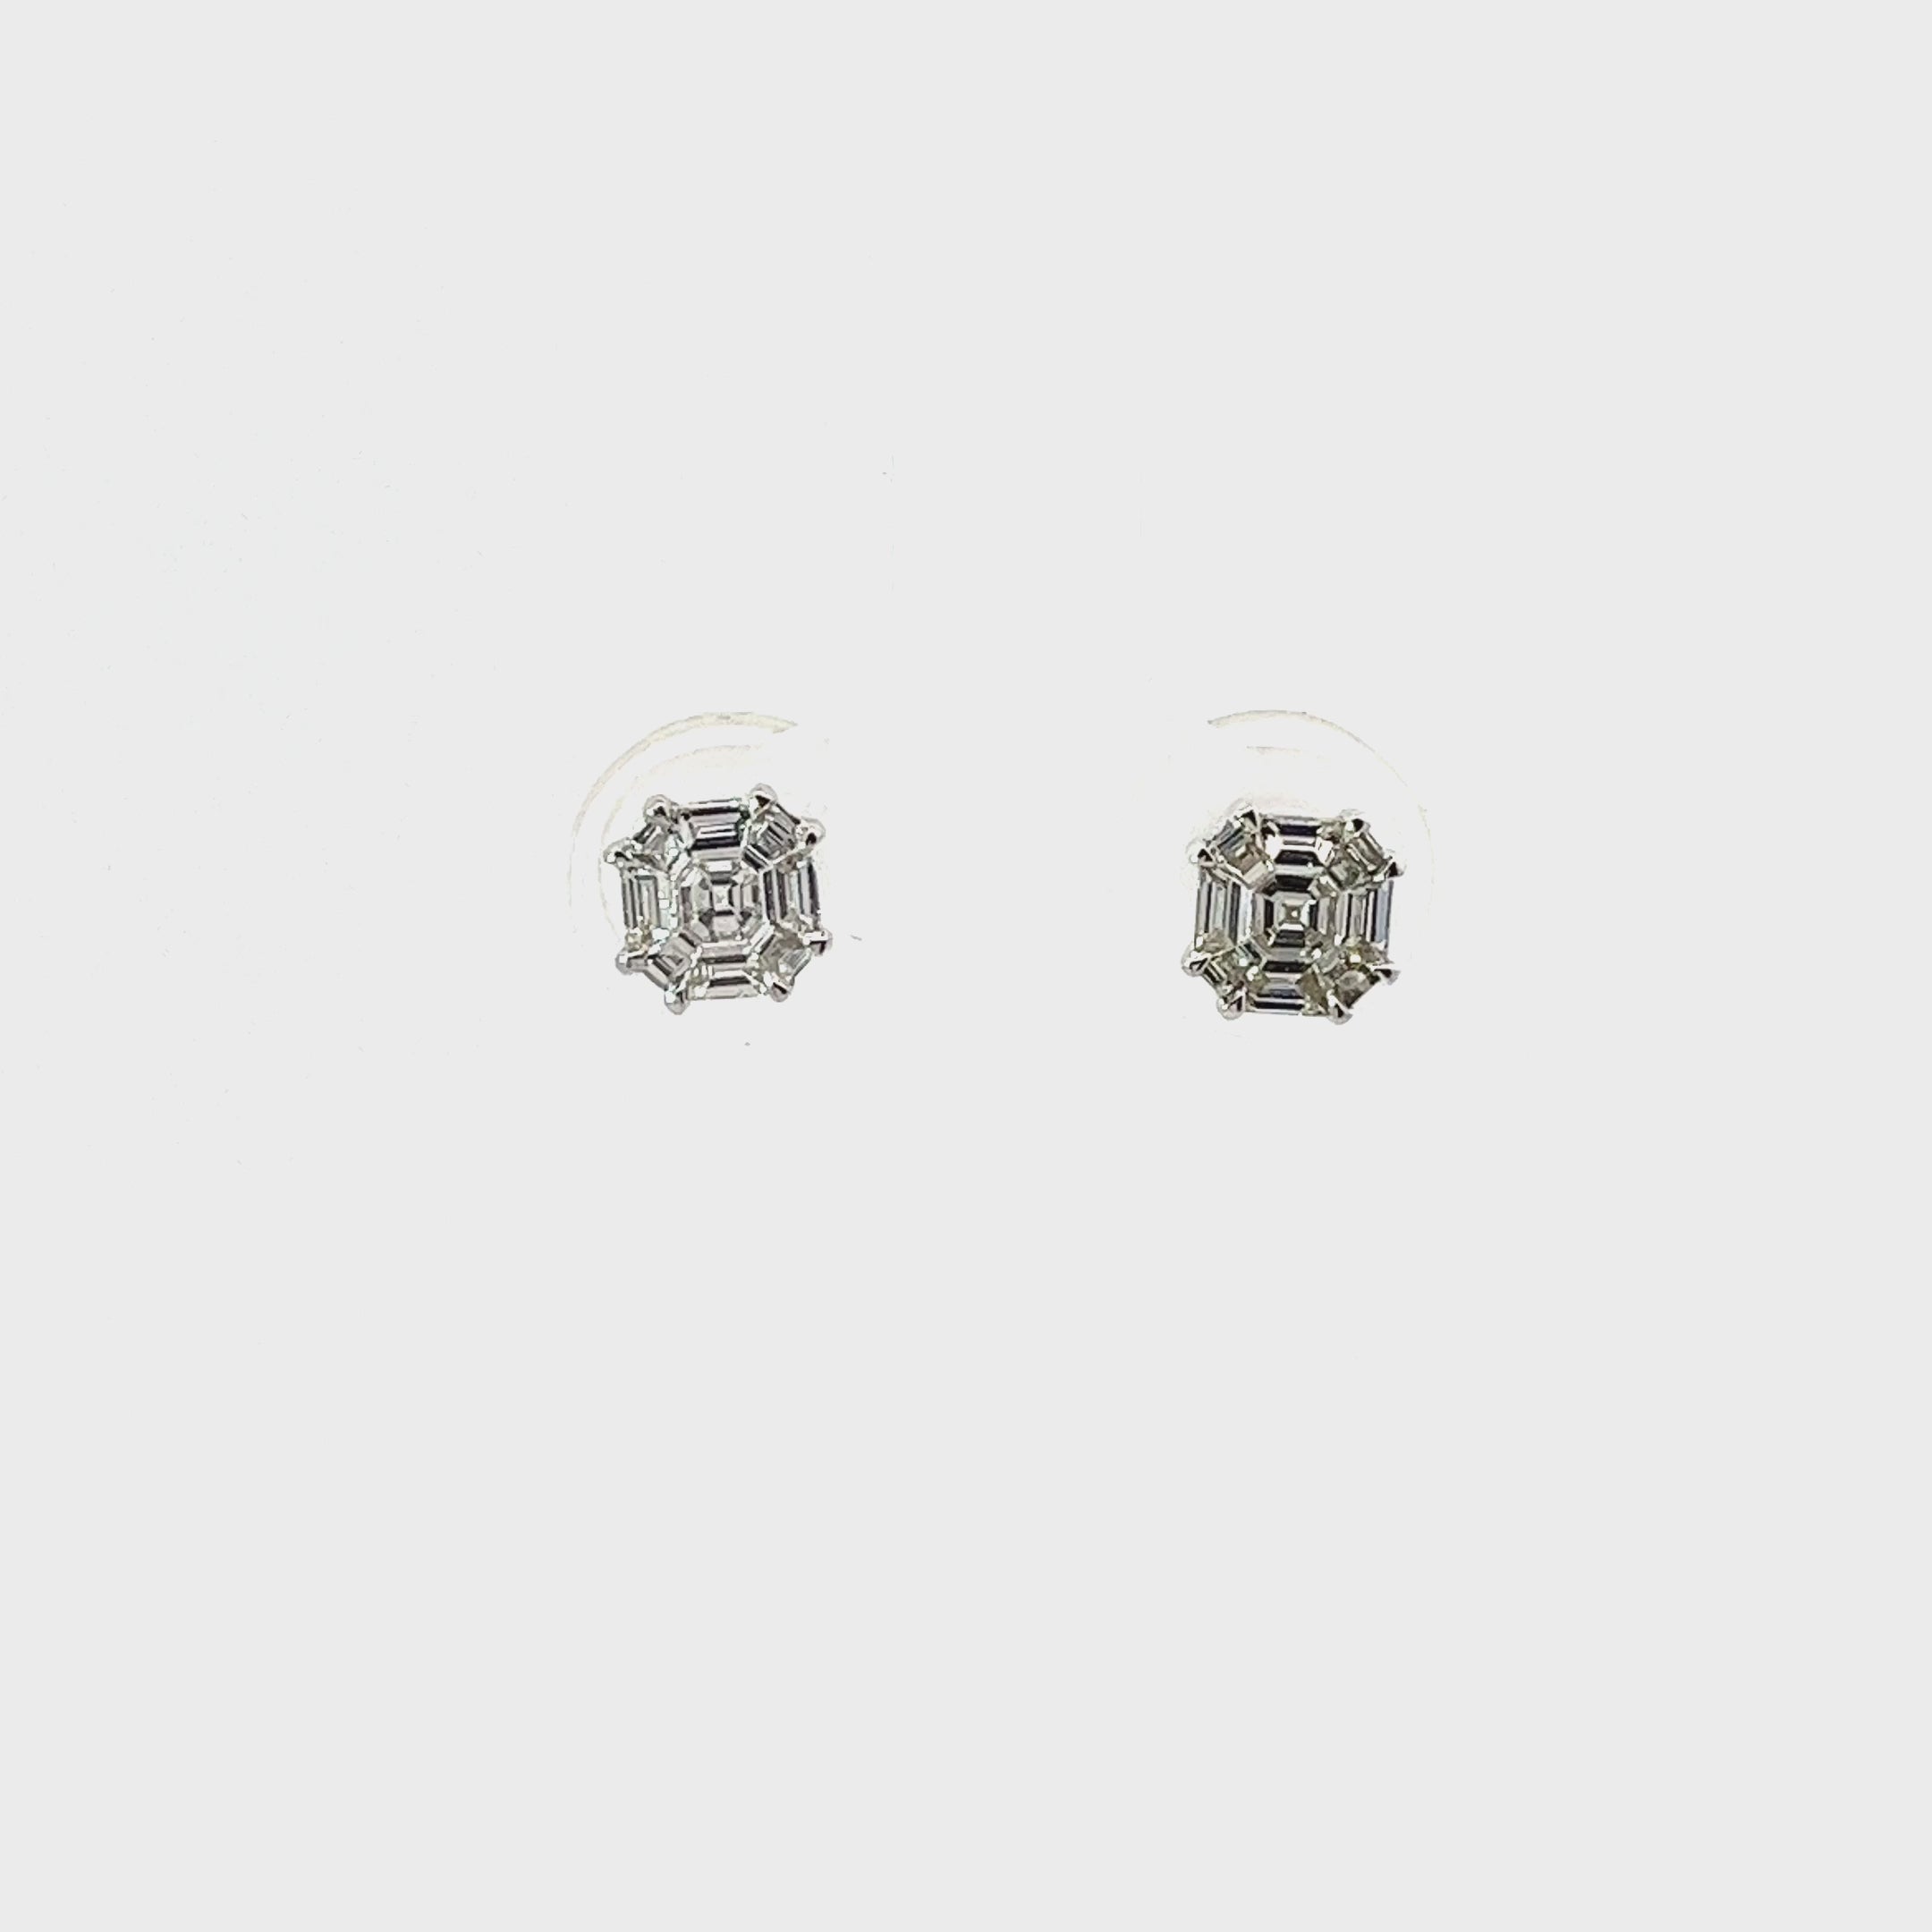 Ladies 14k white gold Ascher Cut Cluster diamond earrings